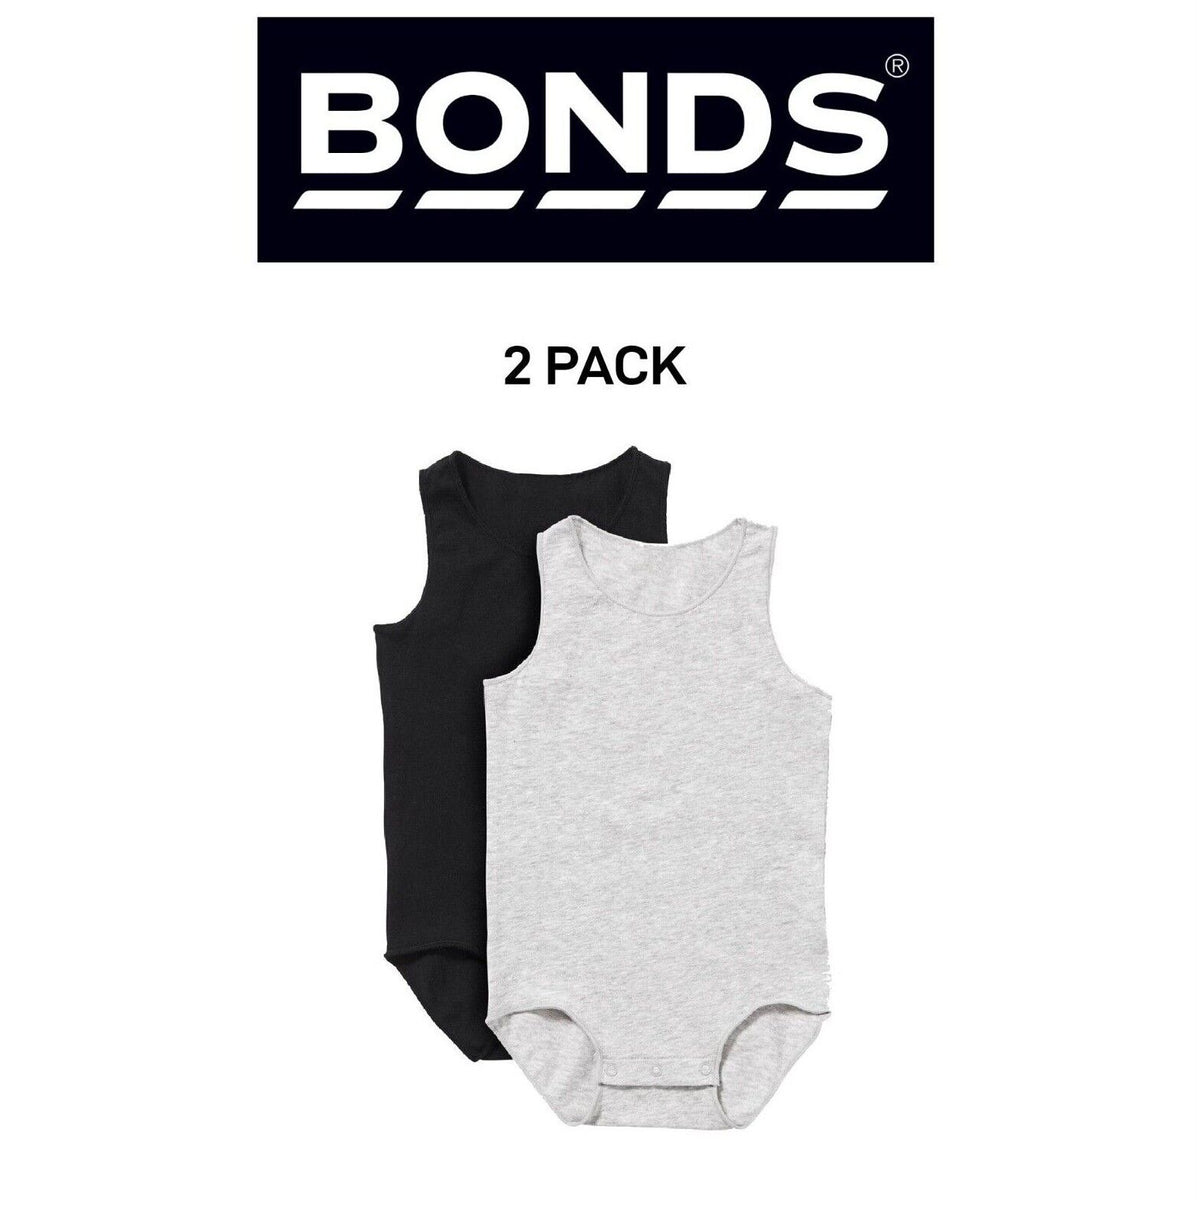 Bonds Baby Wonderbodies Singlet Suit Super Stretchy Cotton Fabric 2 Pack BXW6A